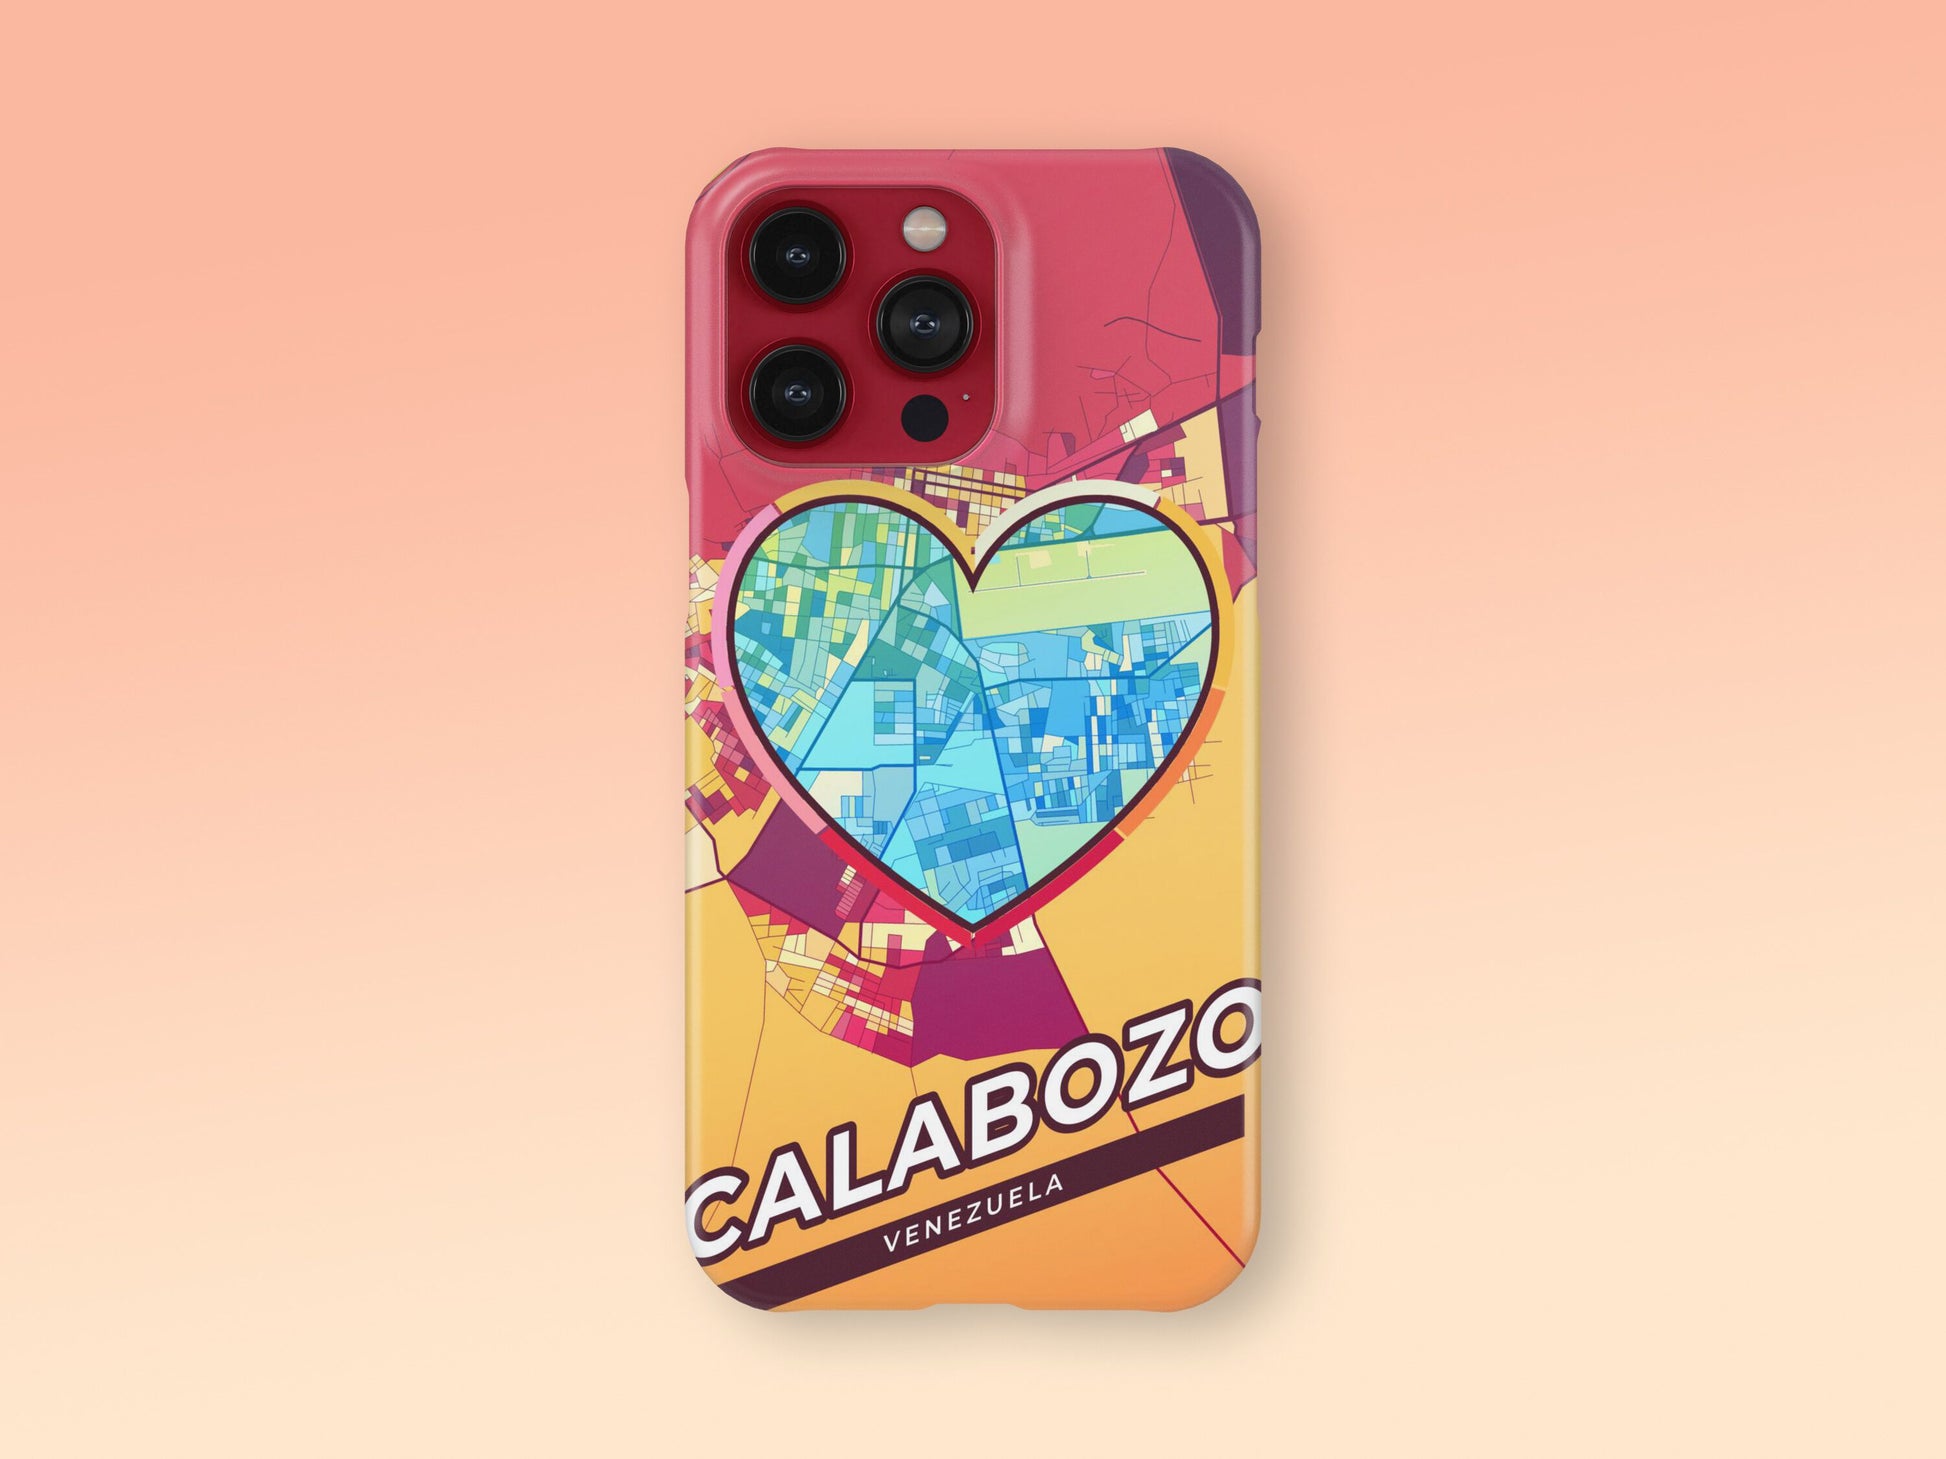 Calabozo Venezuela slim phone case with colorful icon. Birthday, wedding or housewarming gift. Couple match cases. 2